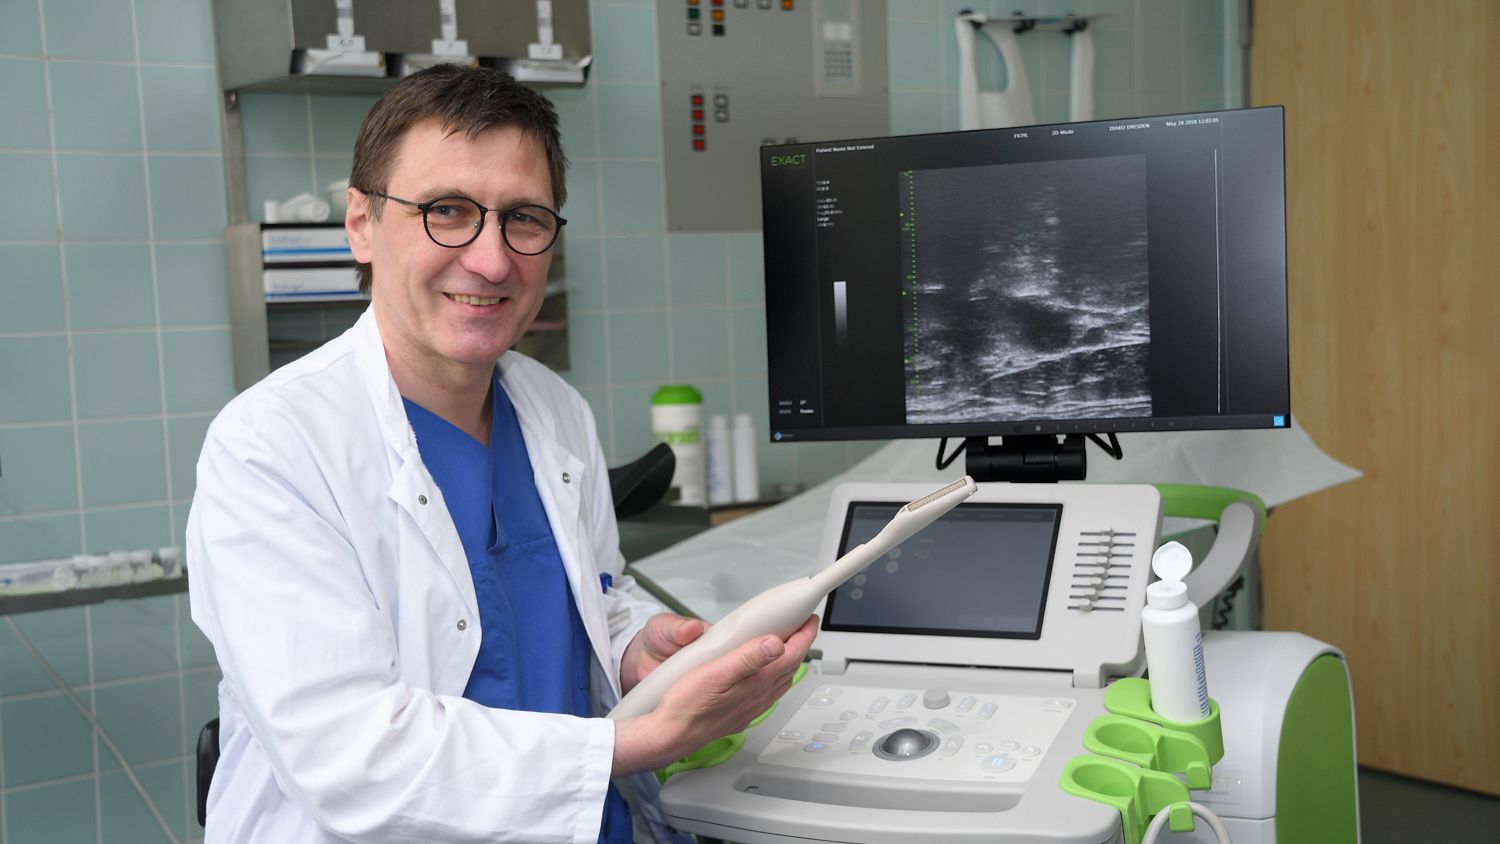 Stephan Bulang, der Chefarzt Urologie mit dem neuen Mikroultraschallgerät. - Foto: Anja Schneider